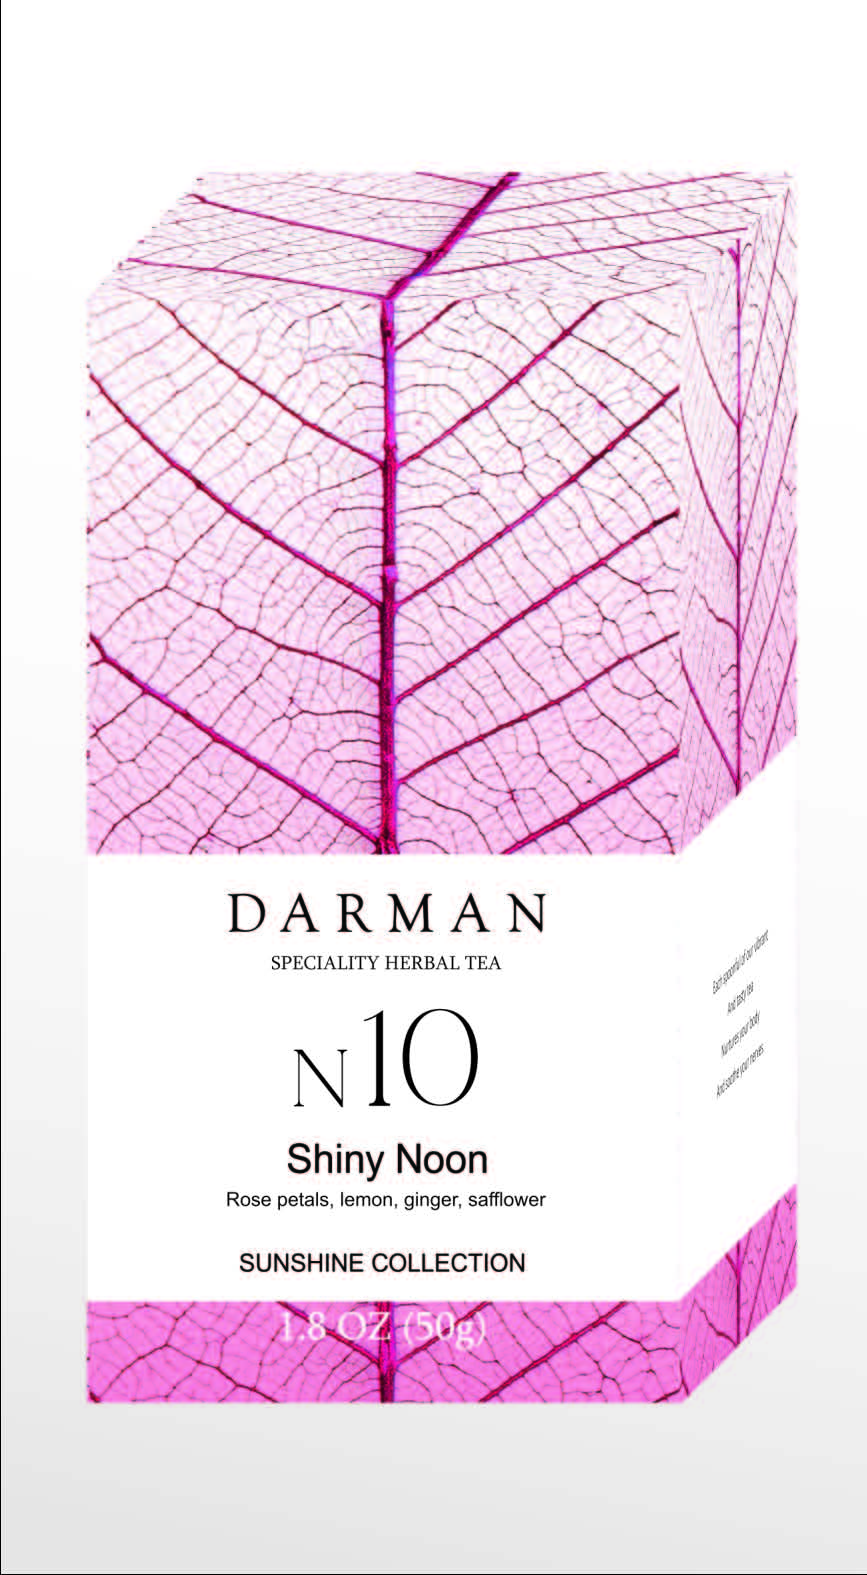 Darman Tea No10 - Shiny Noon (Rose Petals, Dry Lemon, Ginger, Safflower)